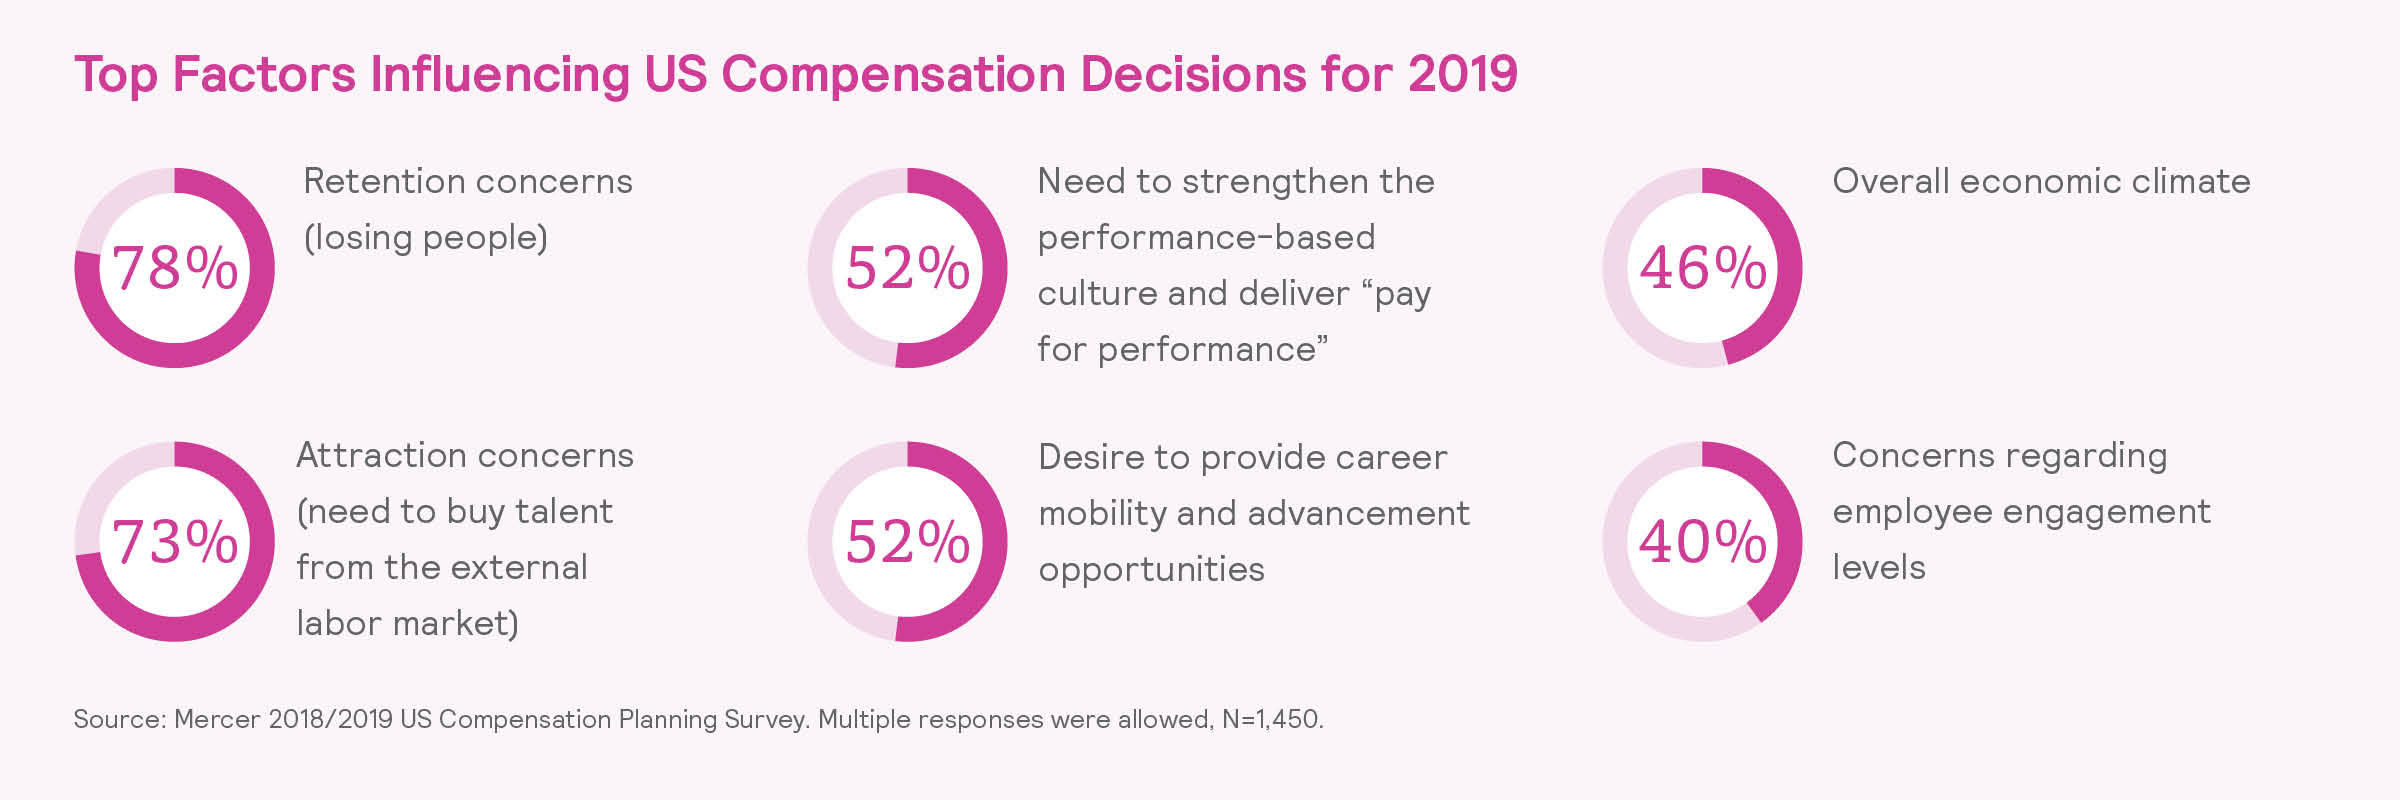 Top Factors Influencing US Compensation Decisions for 2019